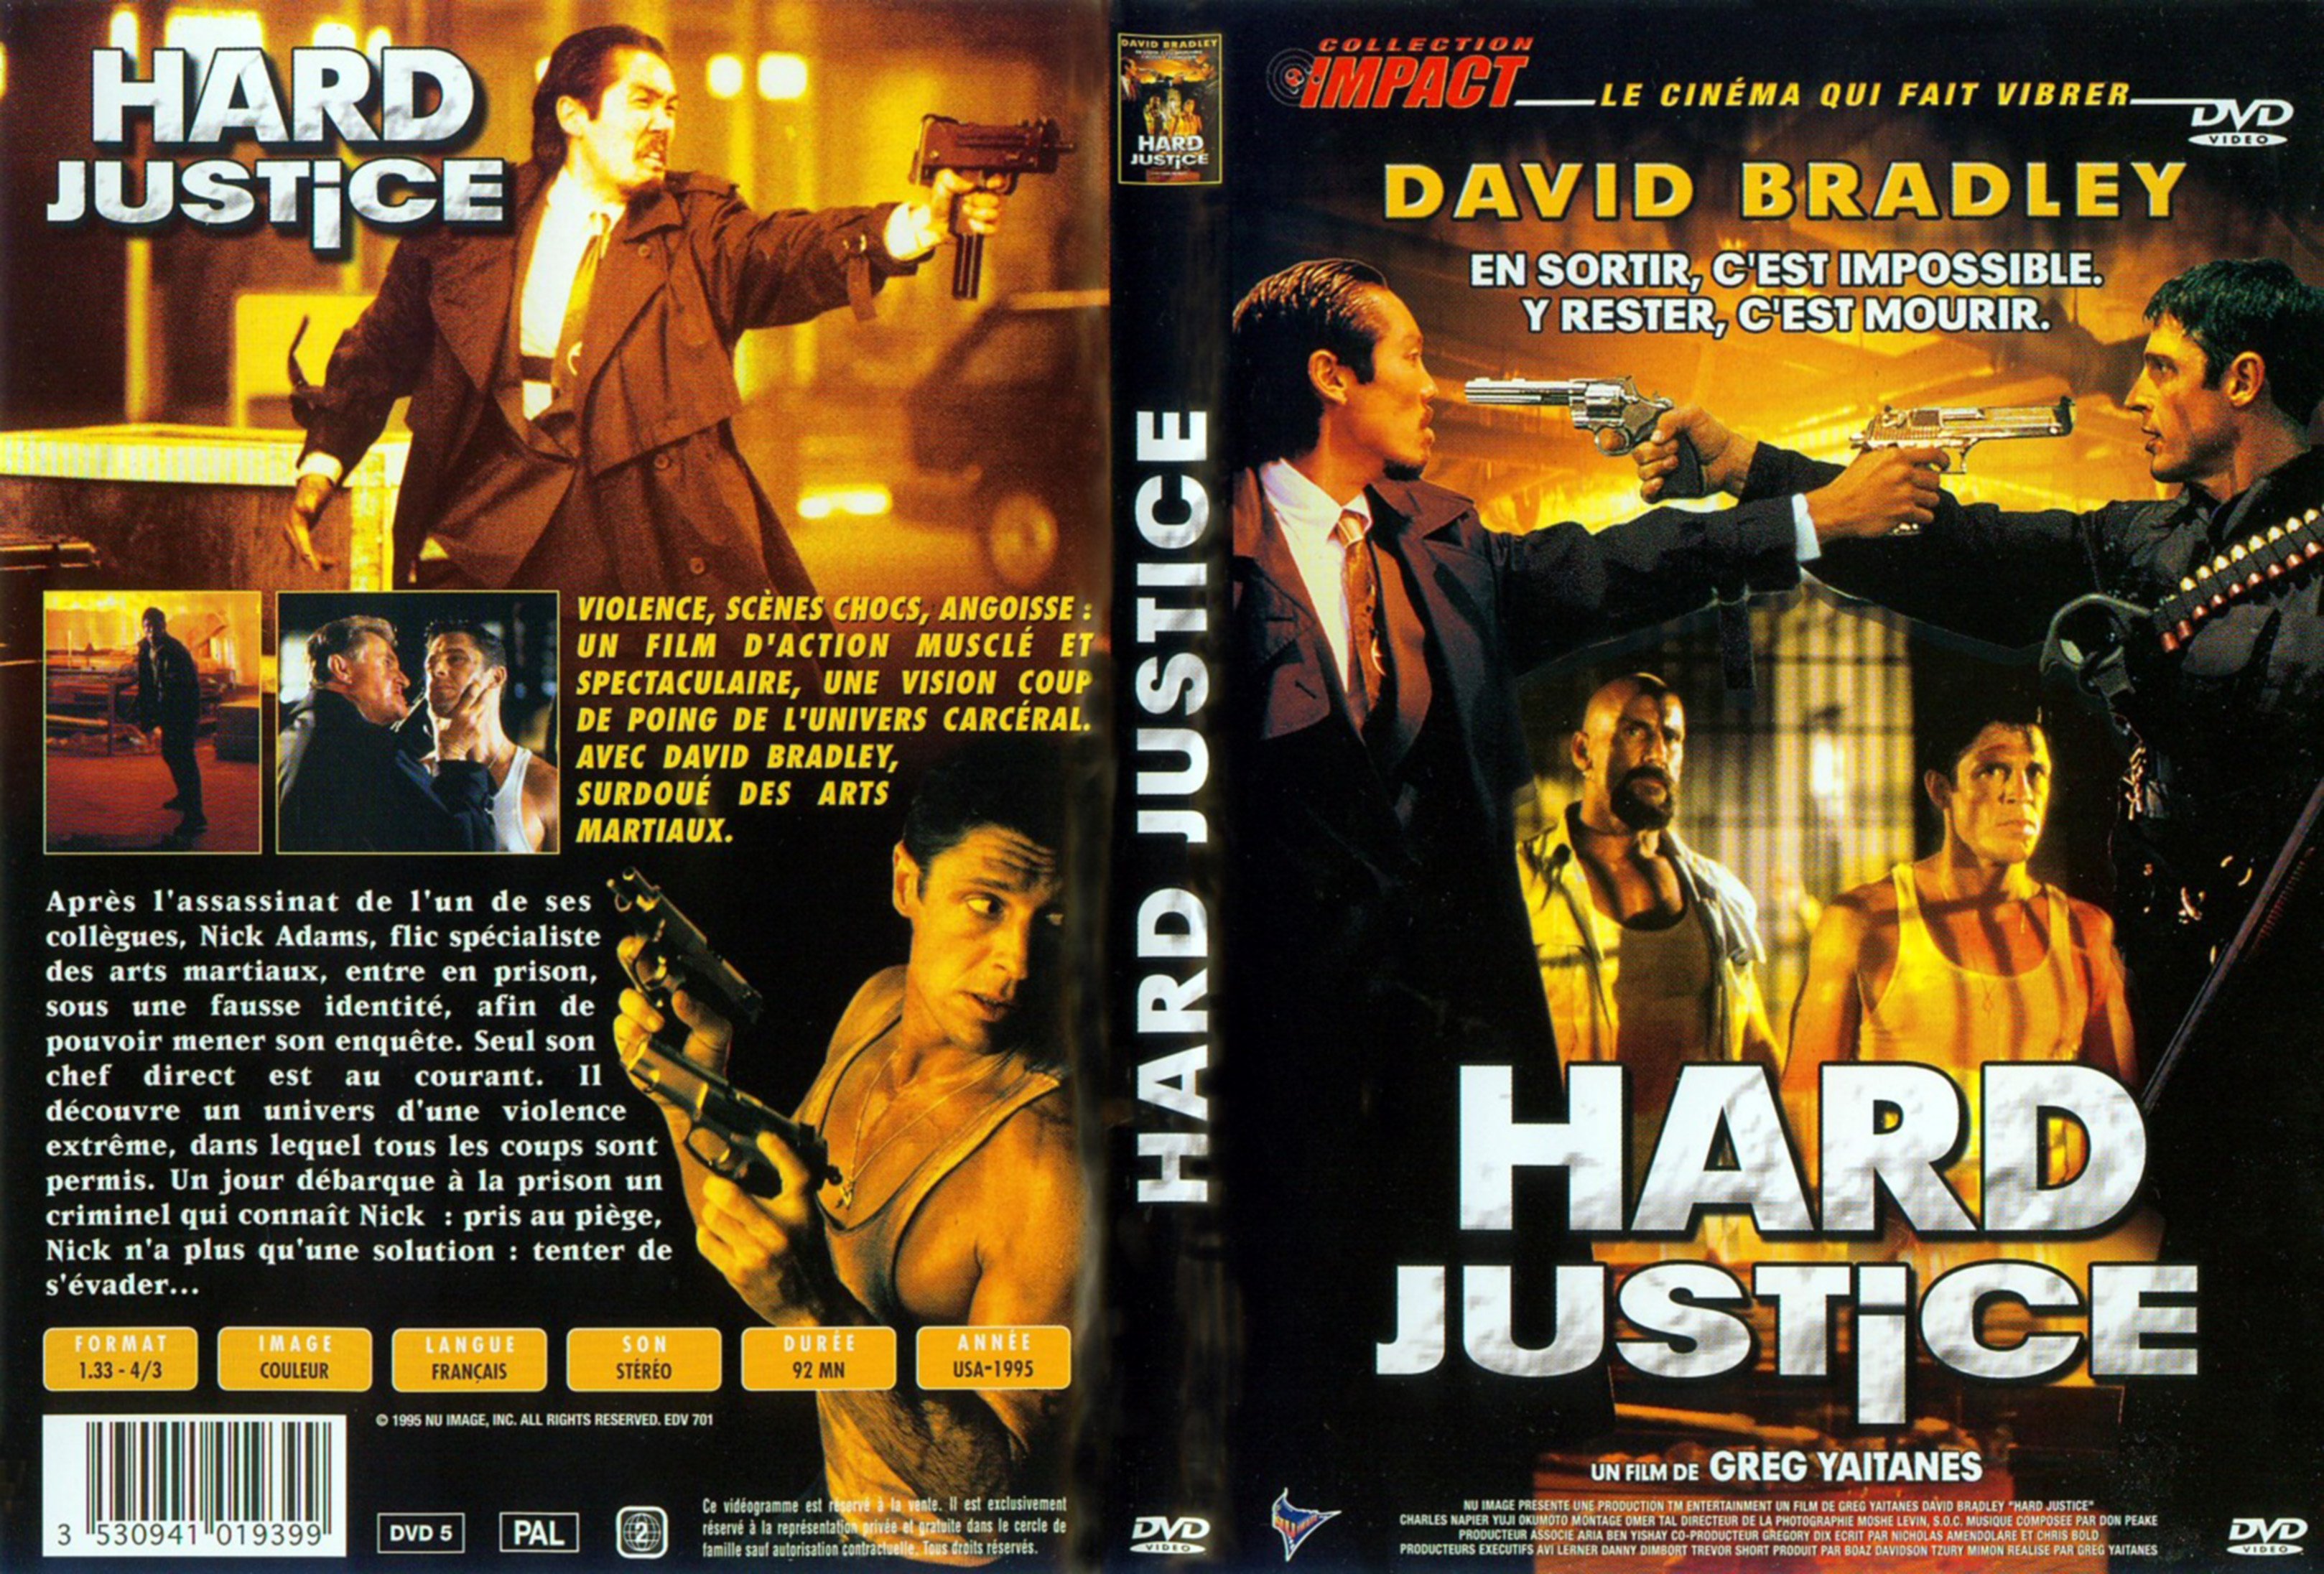 Jaquette DVD Hard justice